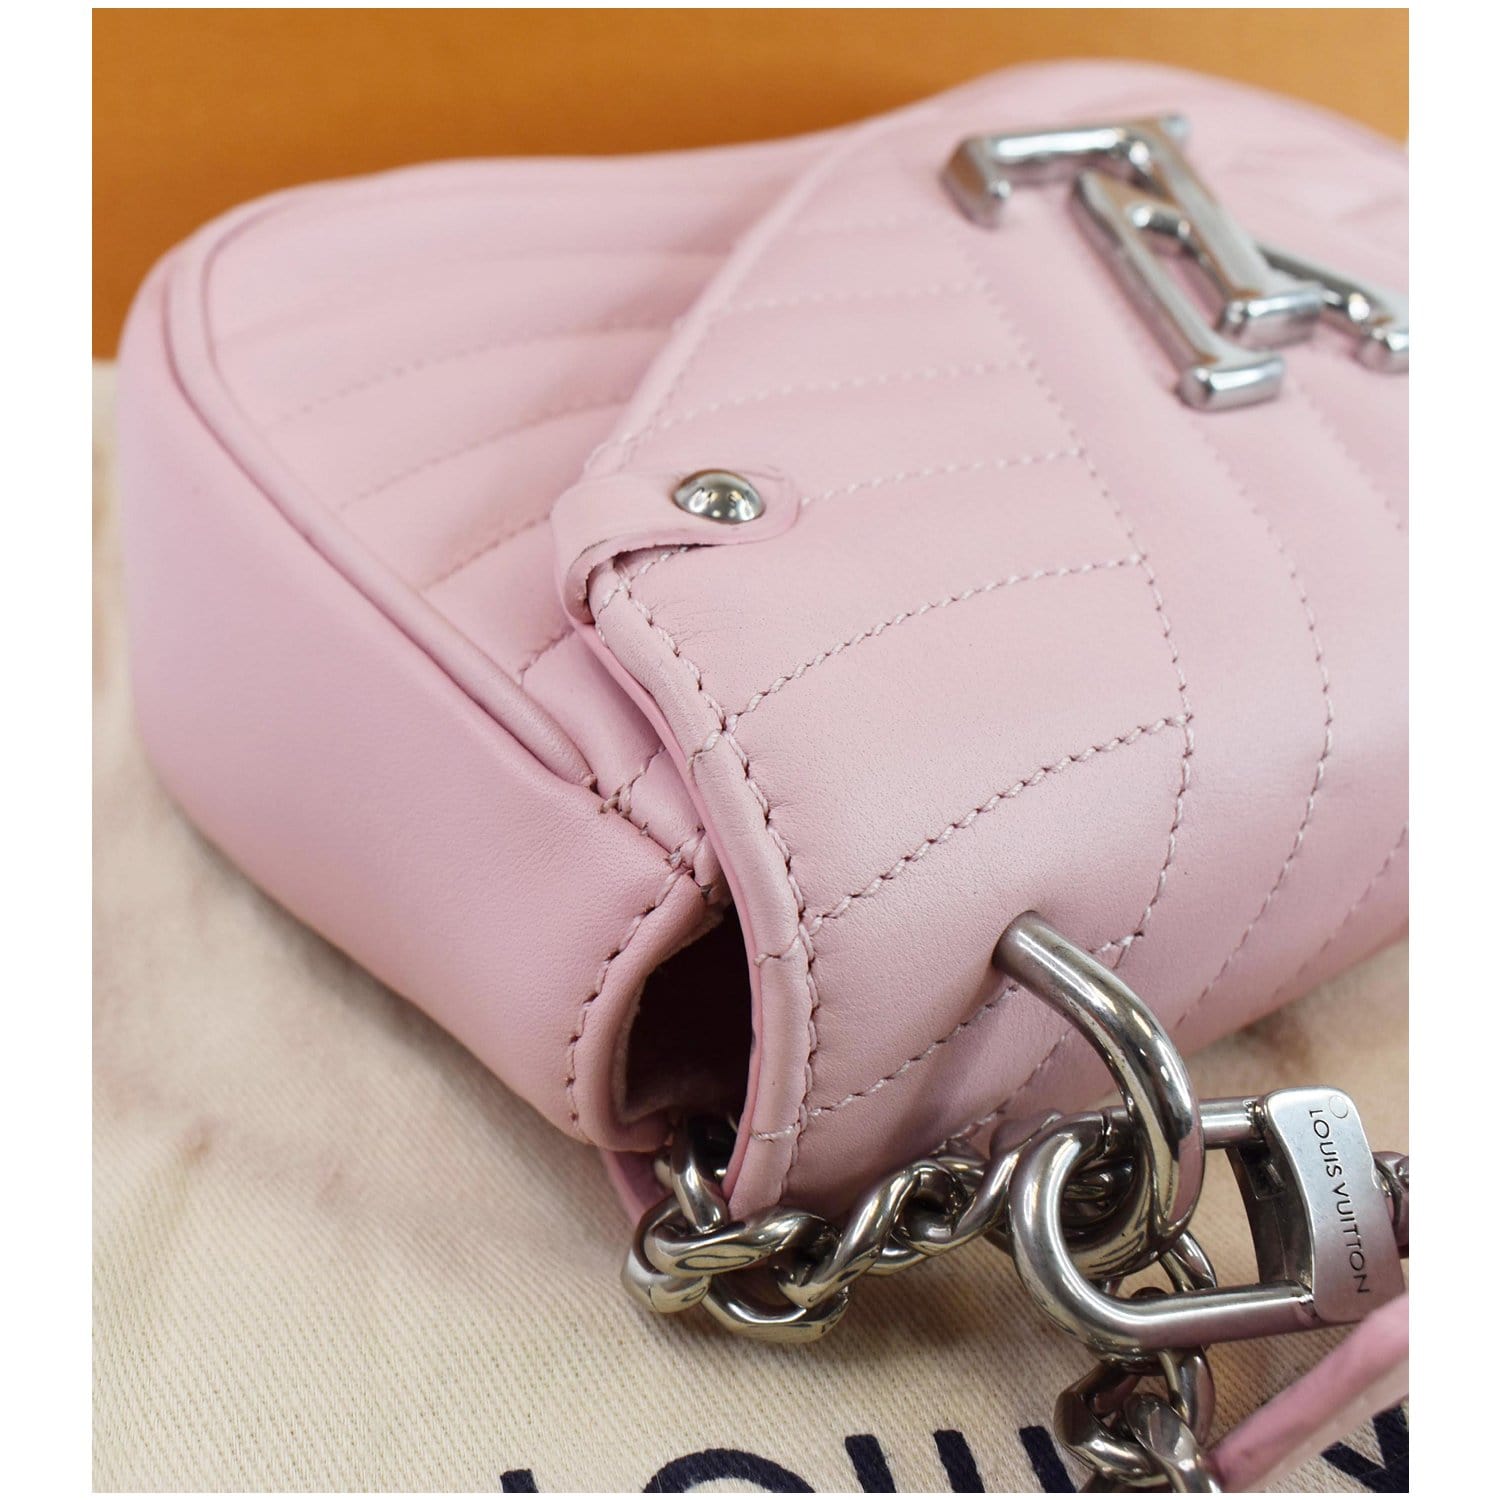 Pin on LV handbags 2018